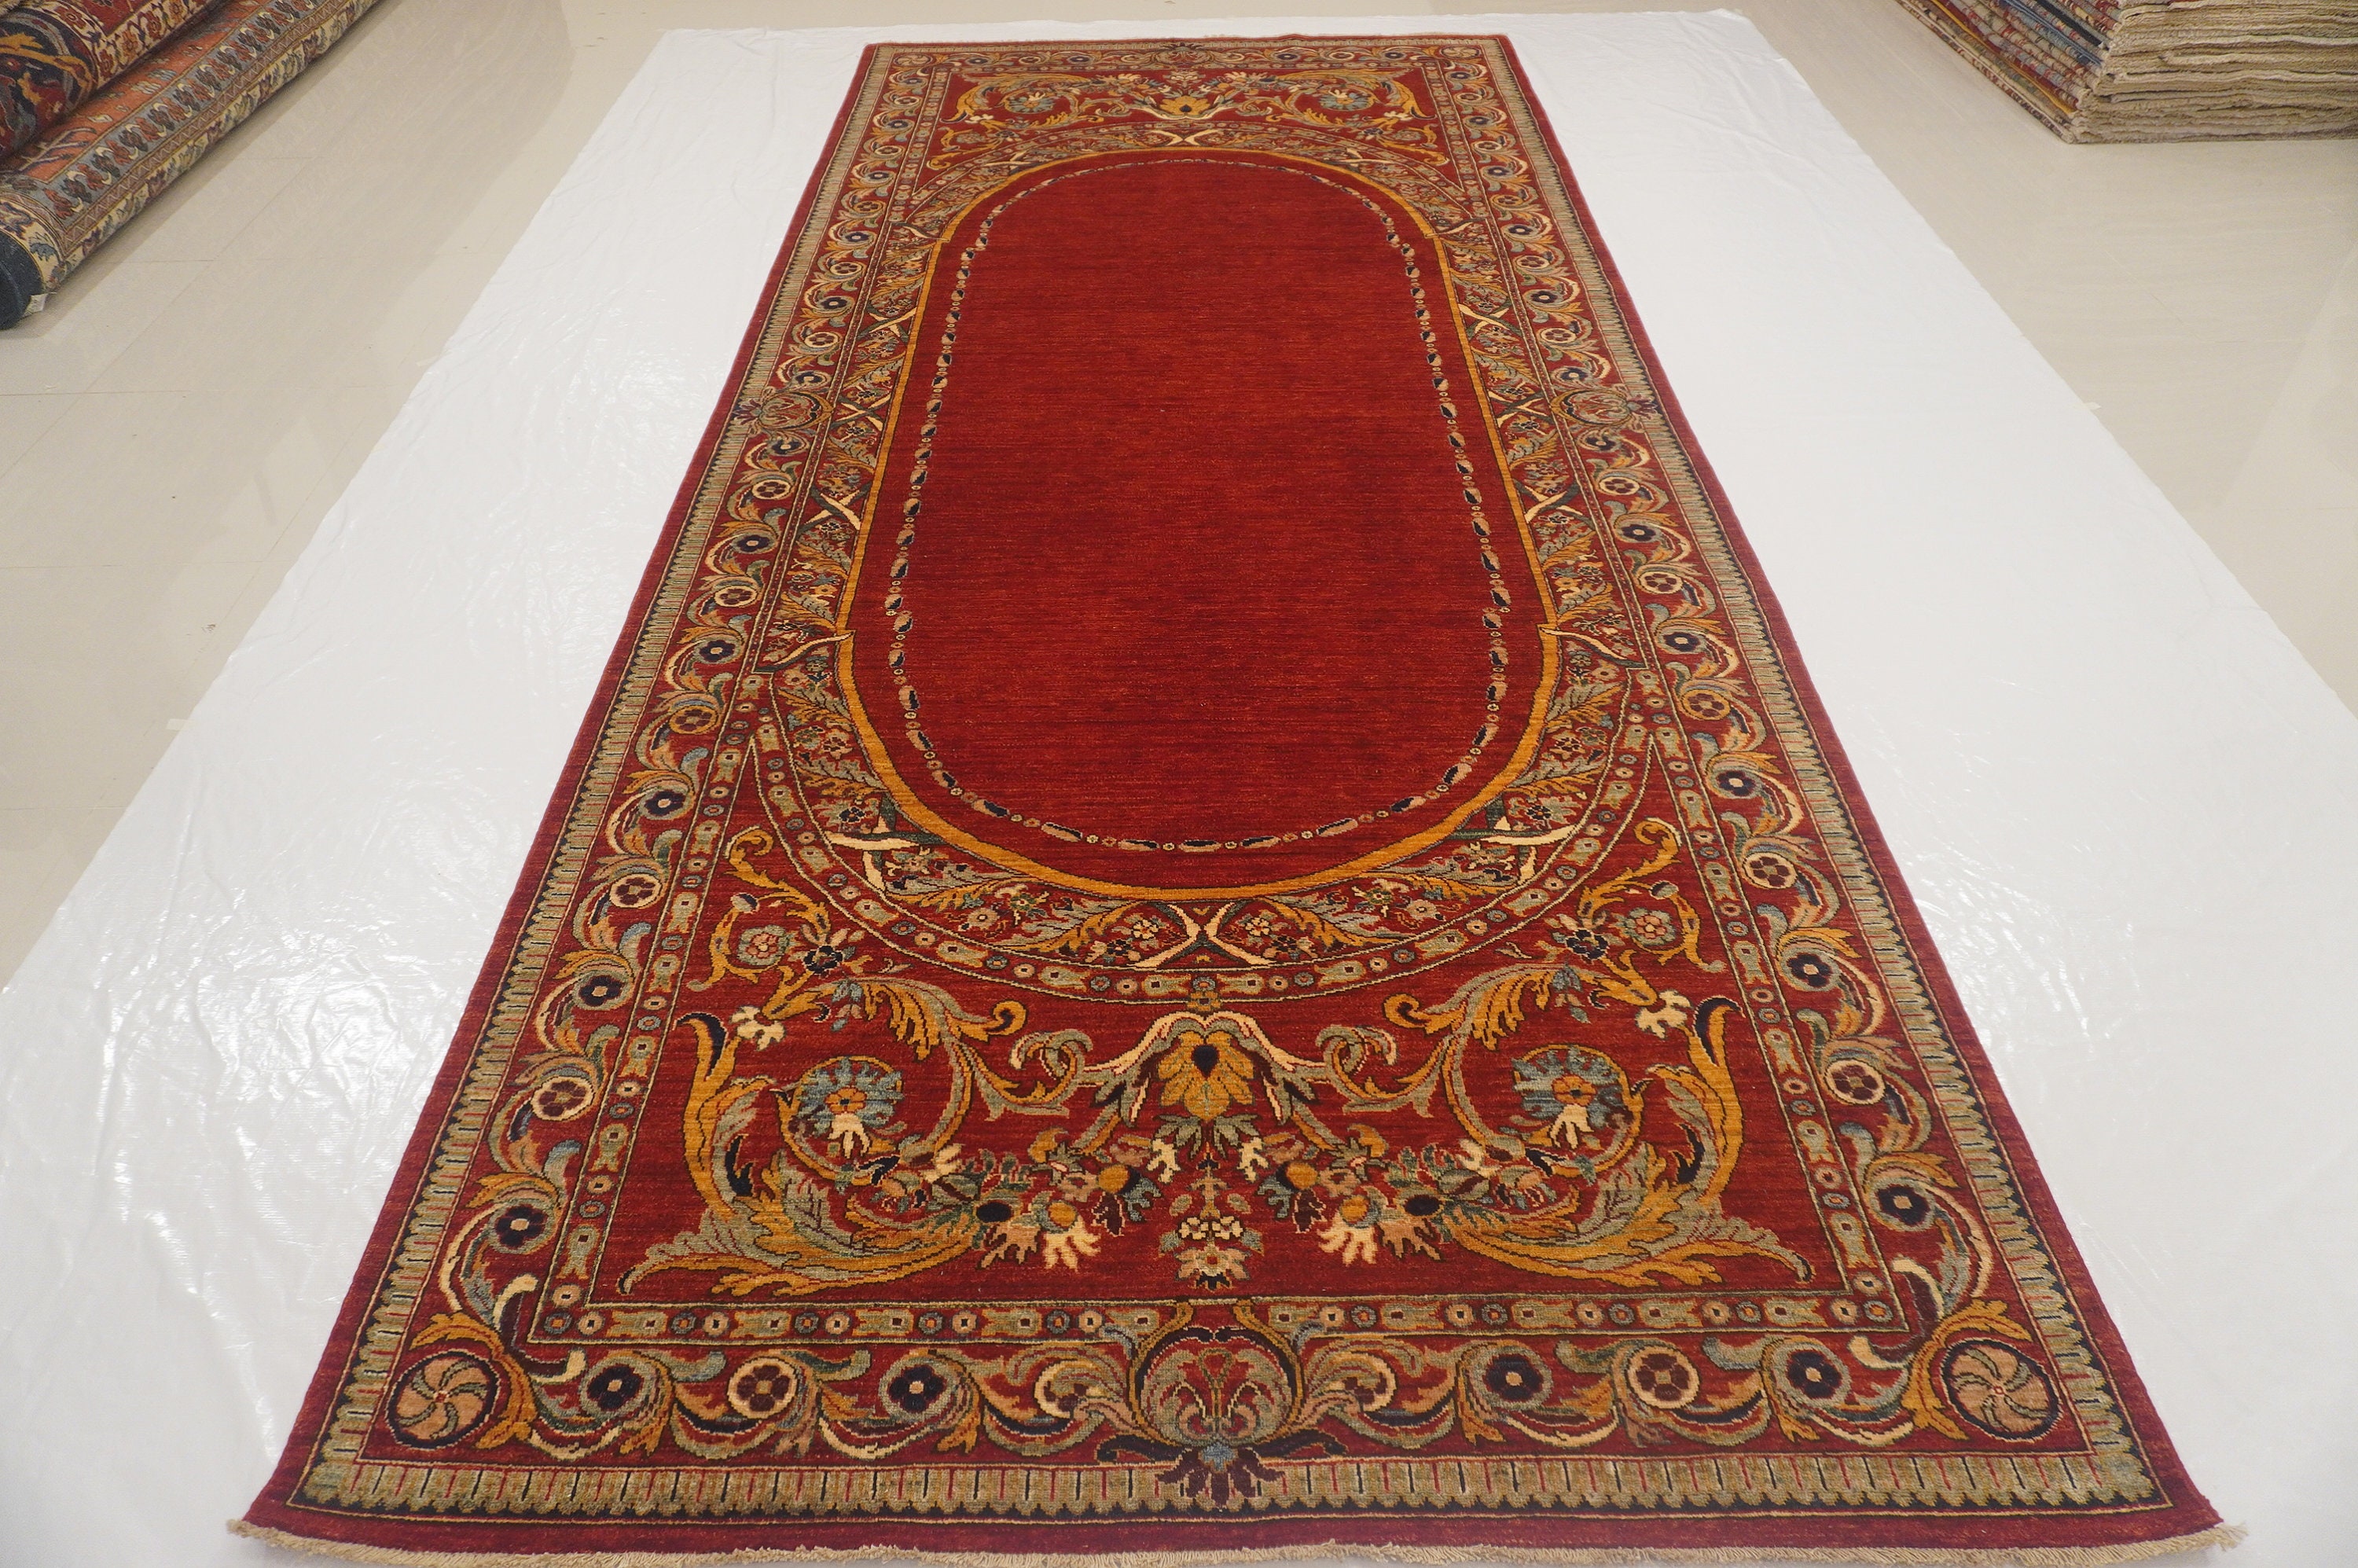 Ottomanson Ottohome Persian Heriz Oriental Design Runner Rug with Non-Skid